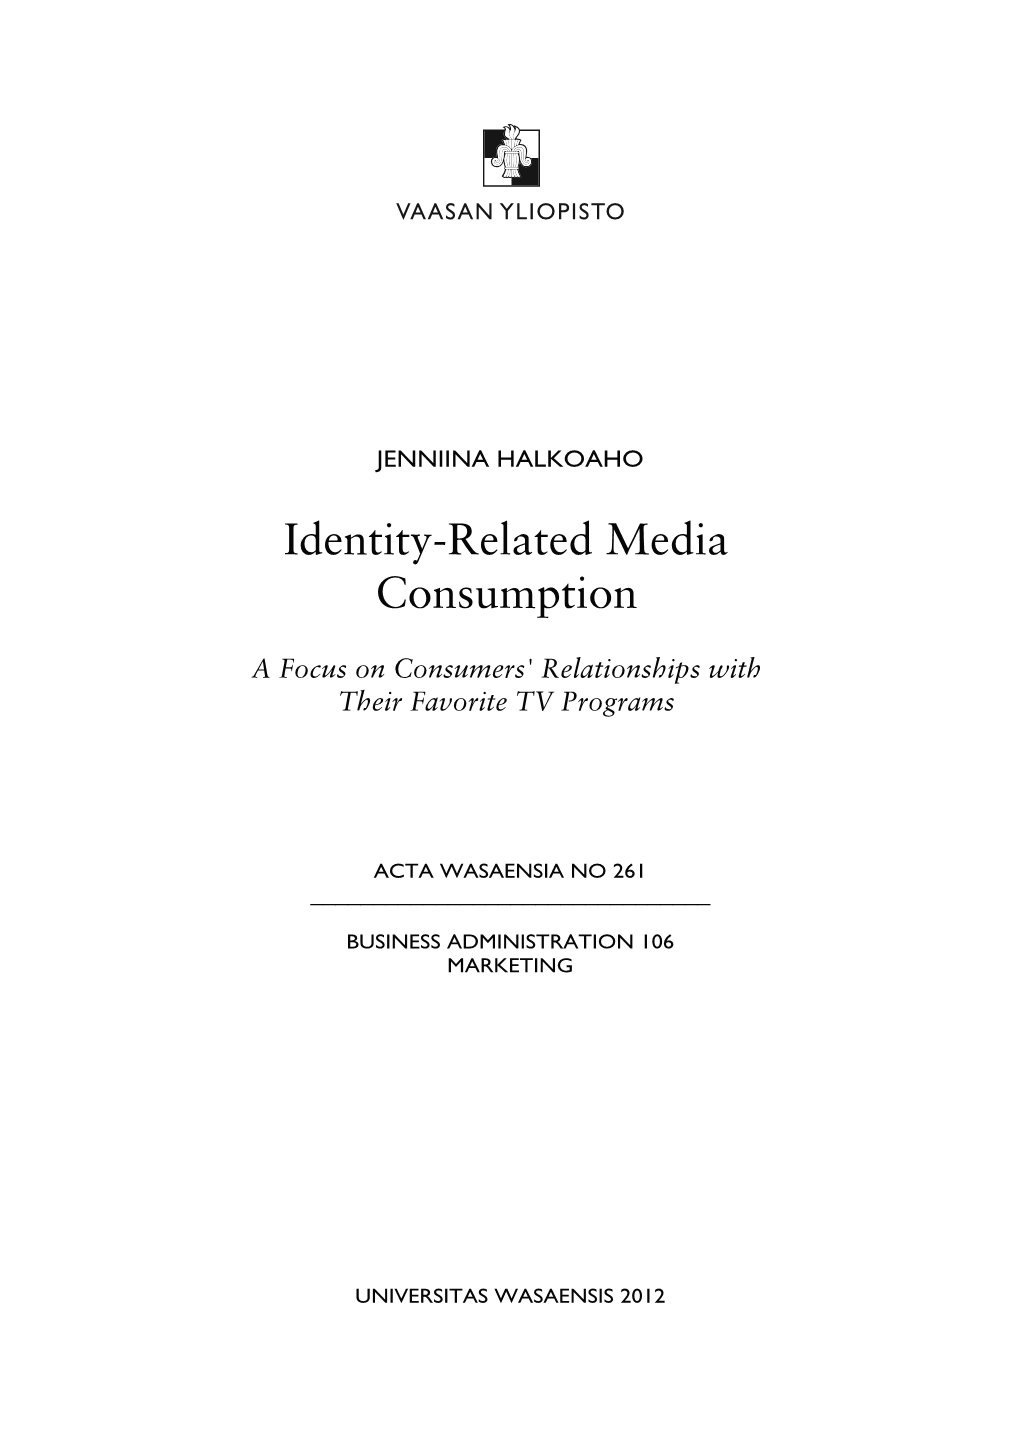 Identity-Related Media Consumption